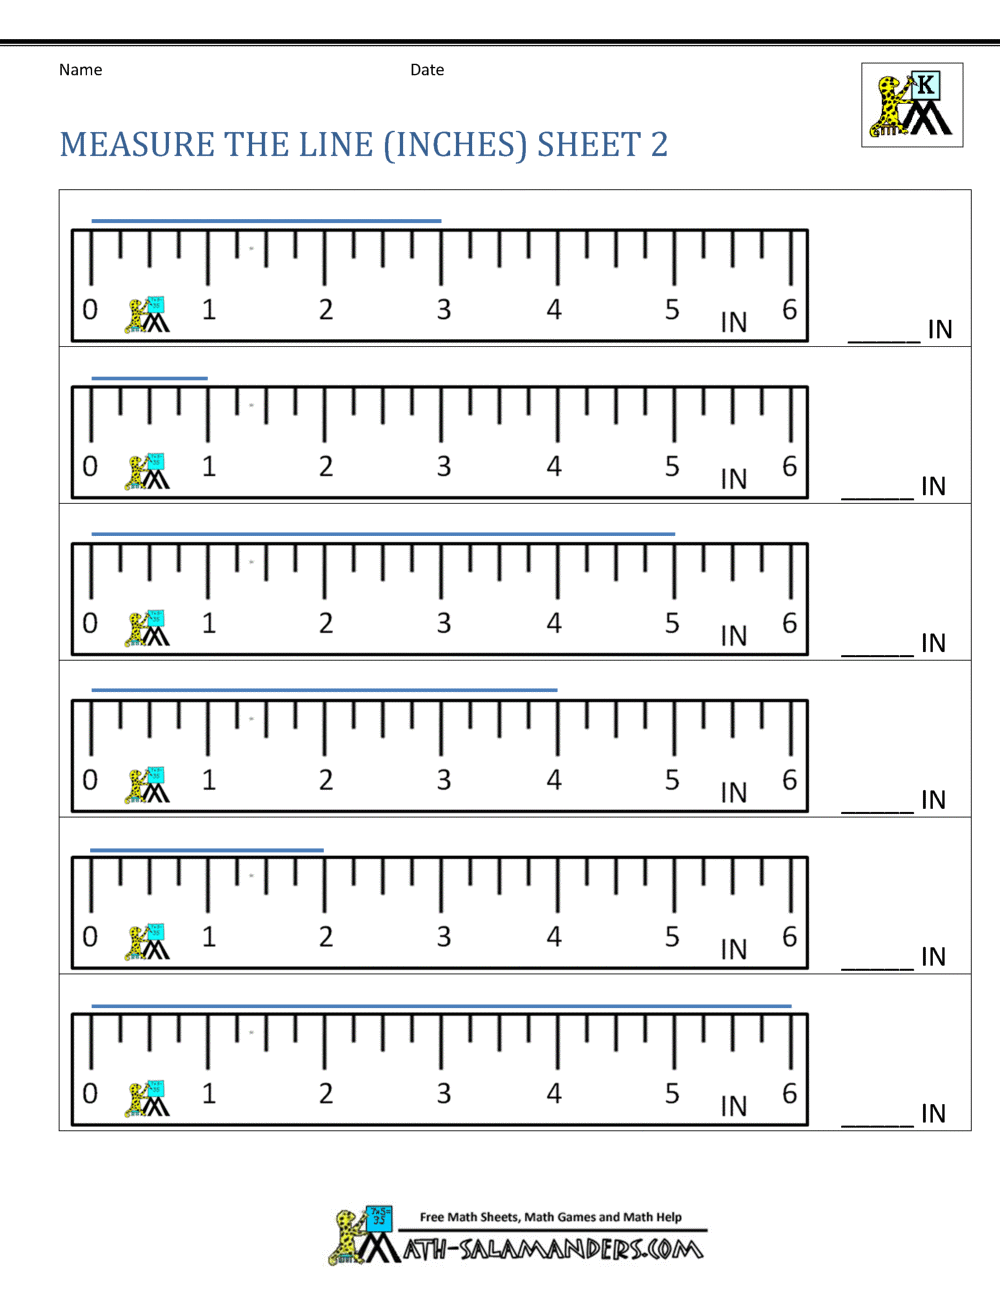 Math Worksheets for Kindergarten - Measuring Length alphabet worksheets, education, learning, and math worksheets Worksheets For Lkg 2 1294 x 1000